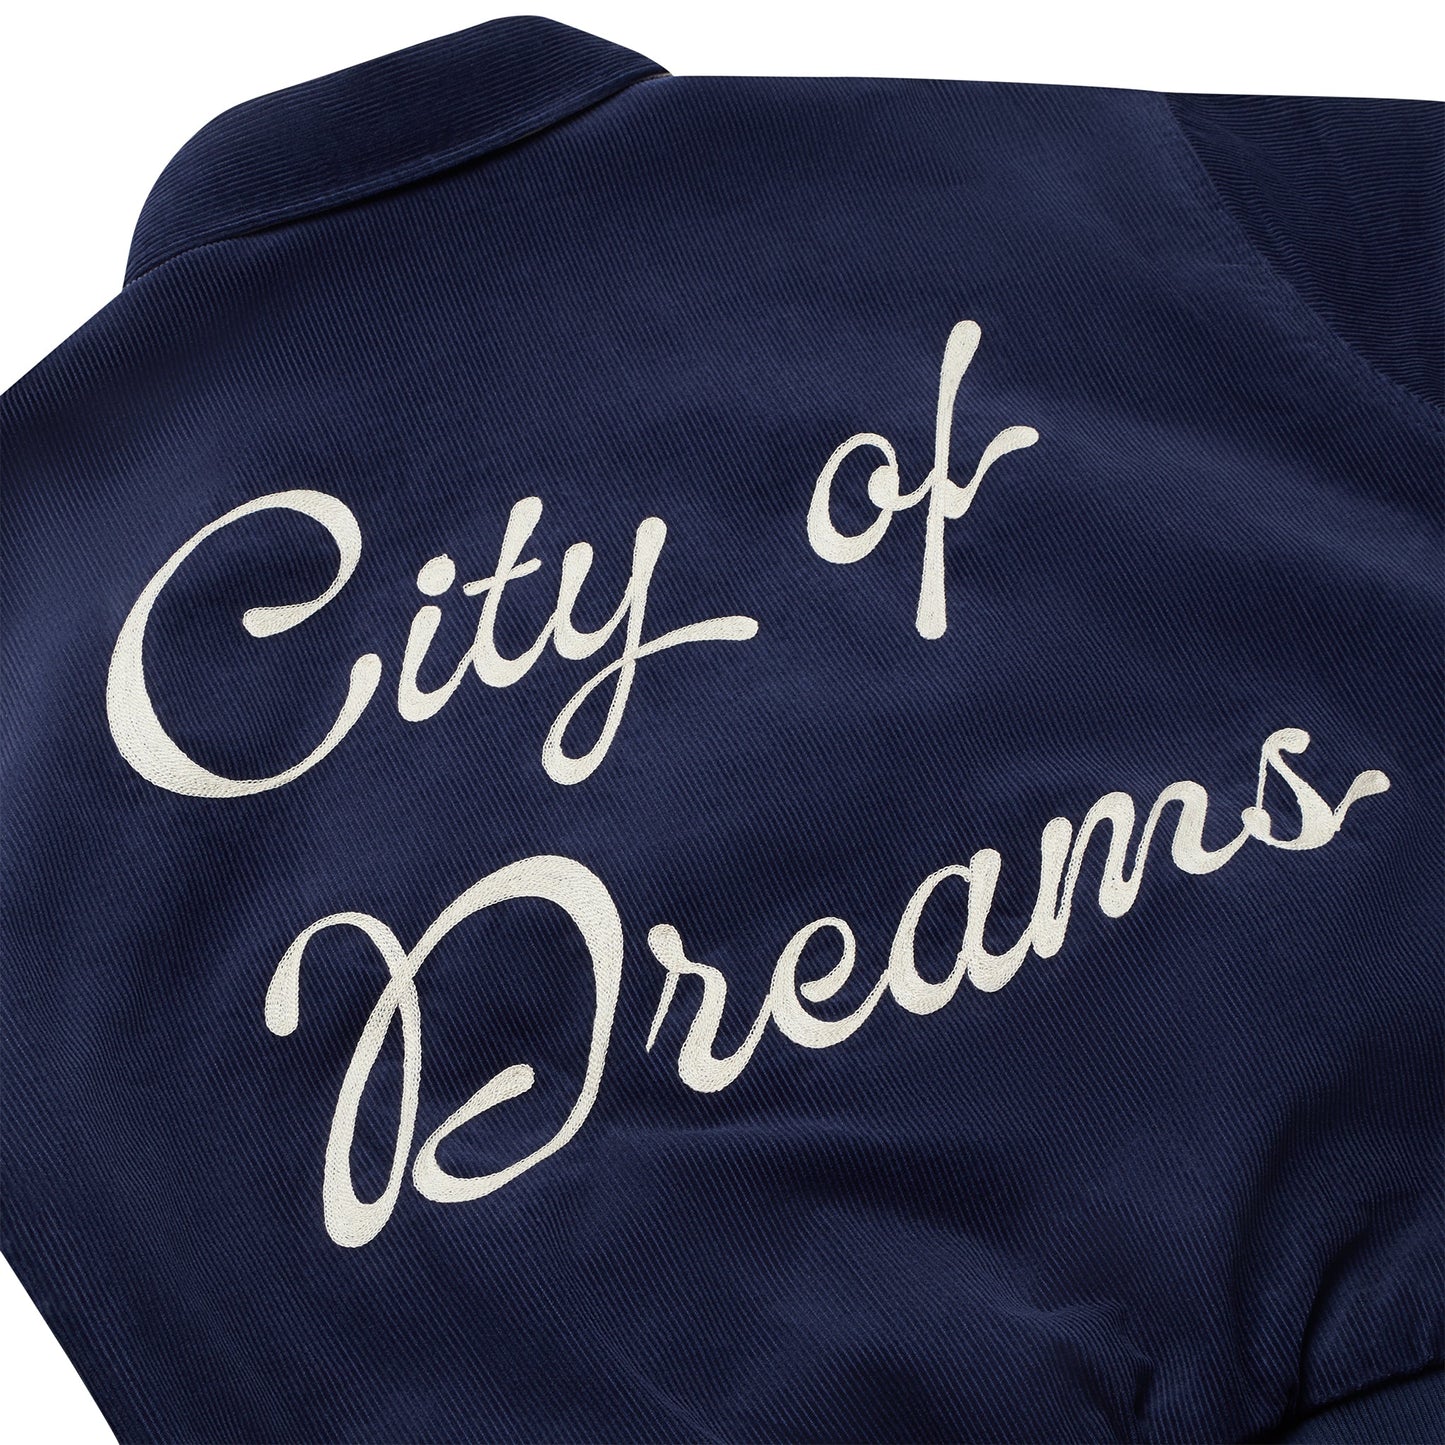 "City of Dreams" Corduroy Jacket - Minted New York